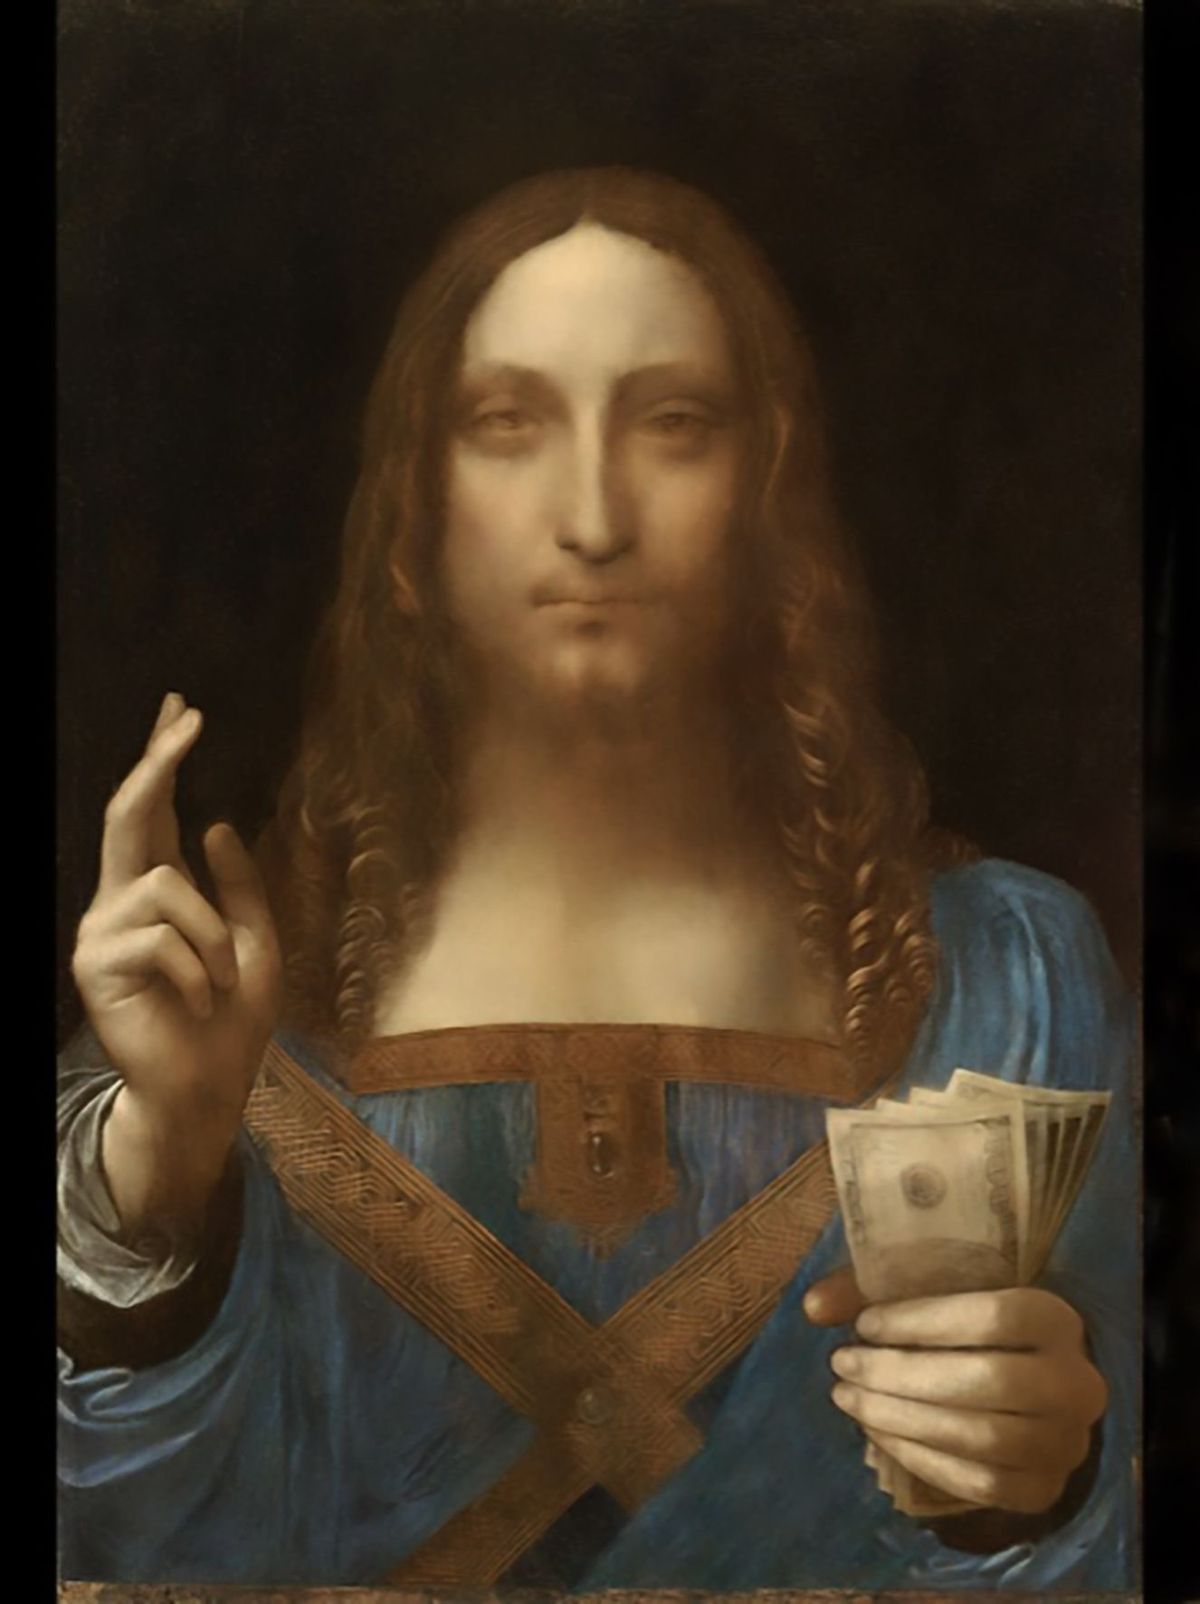 NFT version of Salvator Mundi, Leonardo da Vinci's famous artwork to be auctioned this weekend